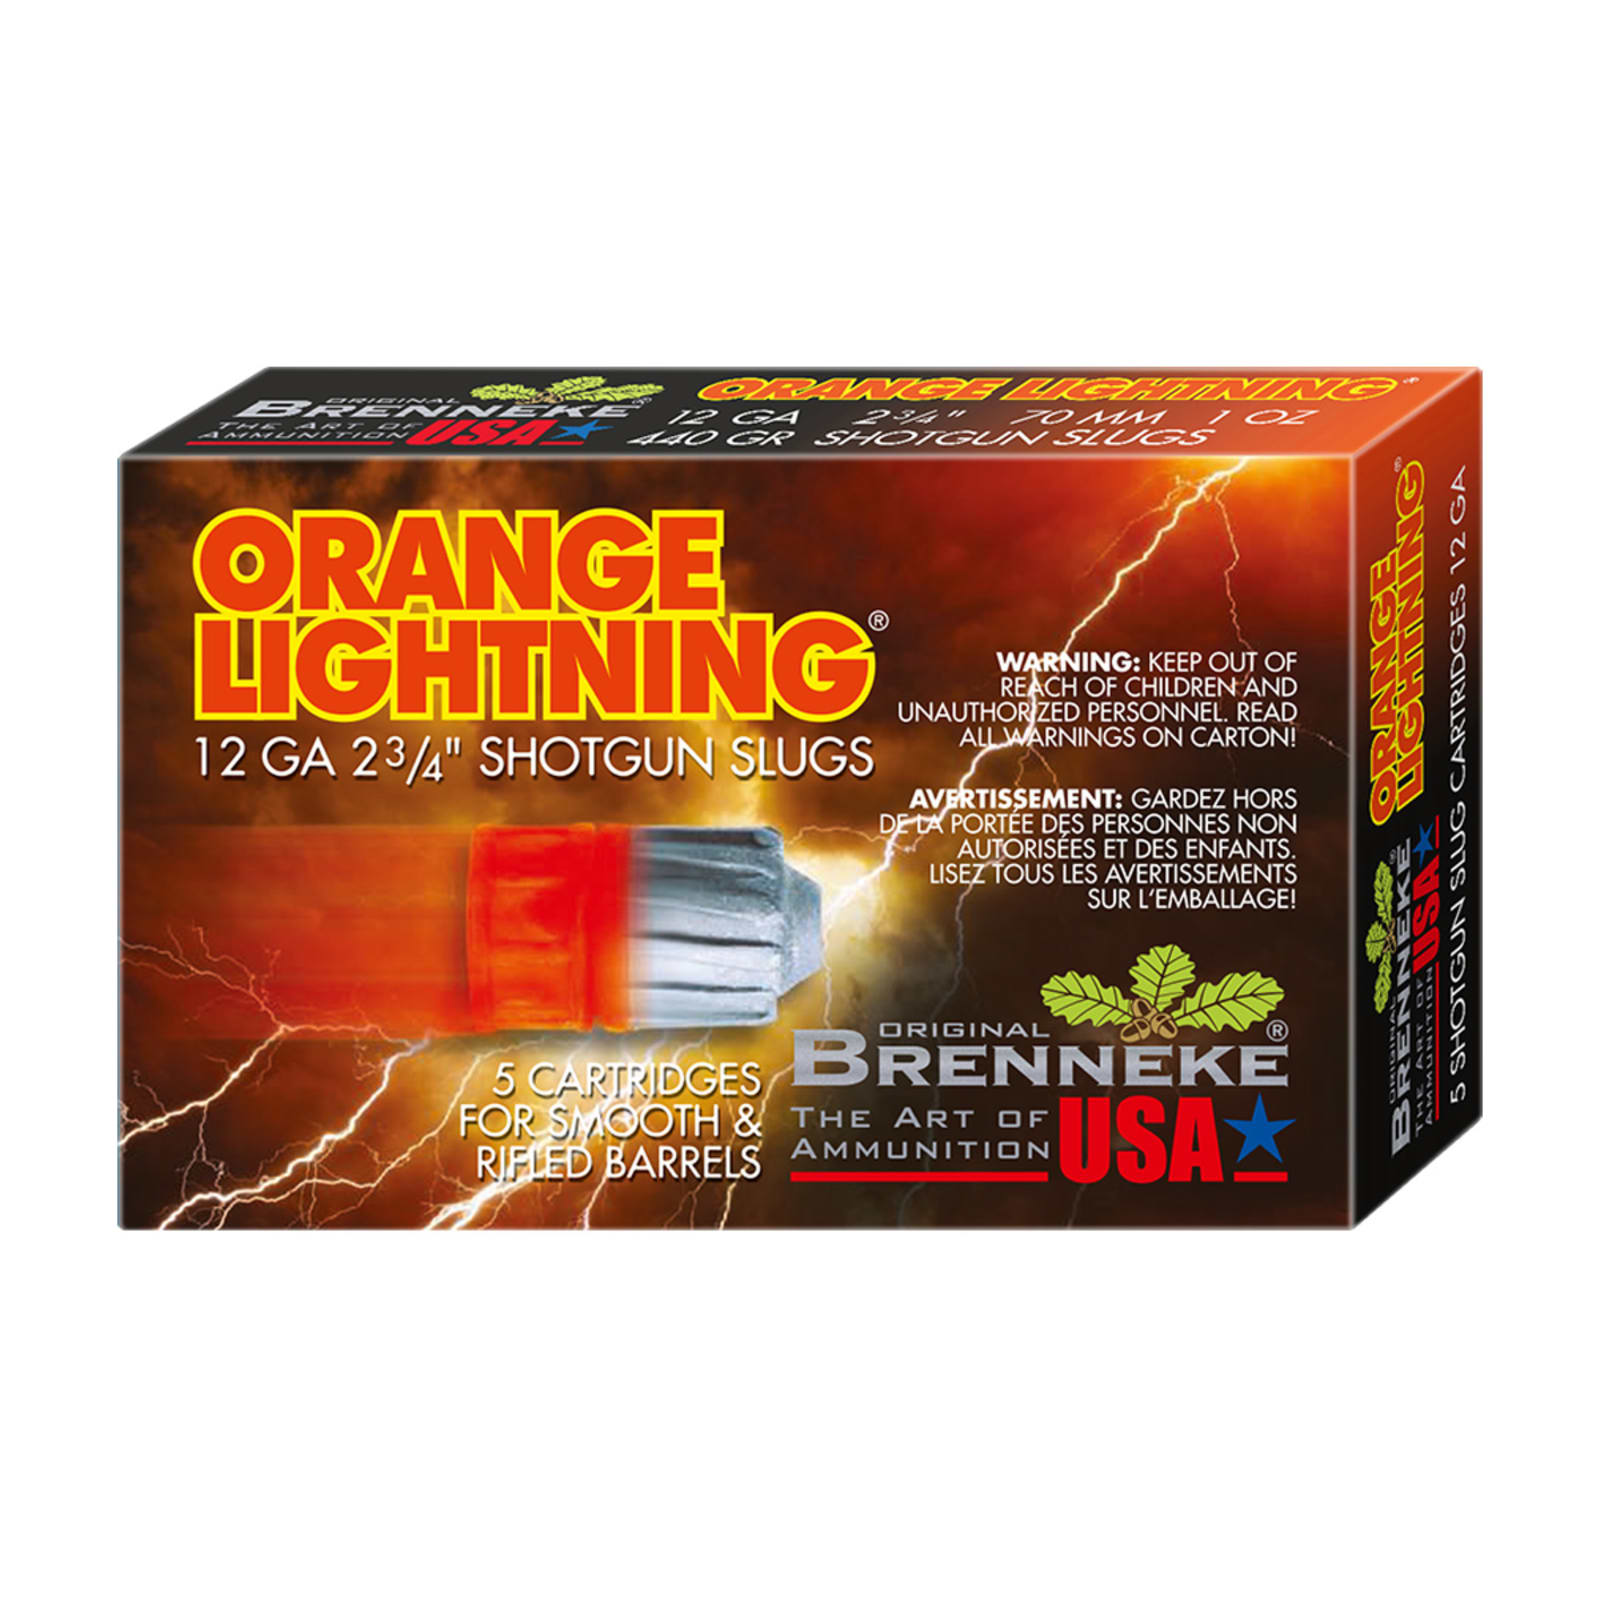 12 Ga Orange Lightning Shotgun Slugs by Brenneke at Fleet Farm